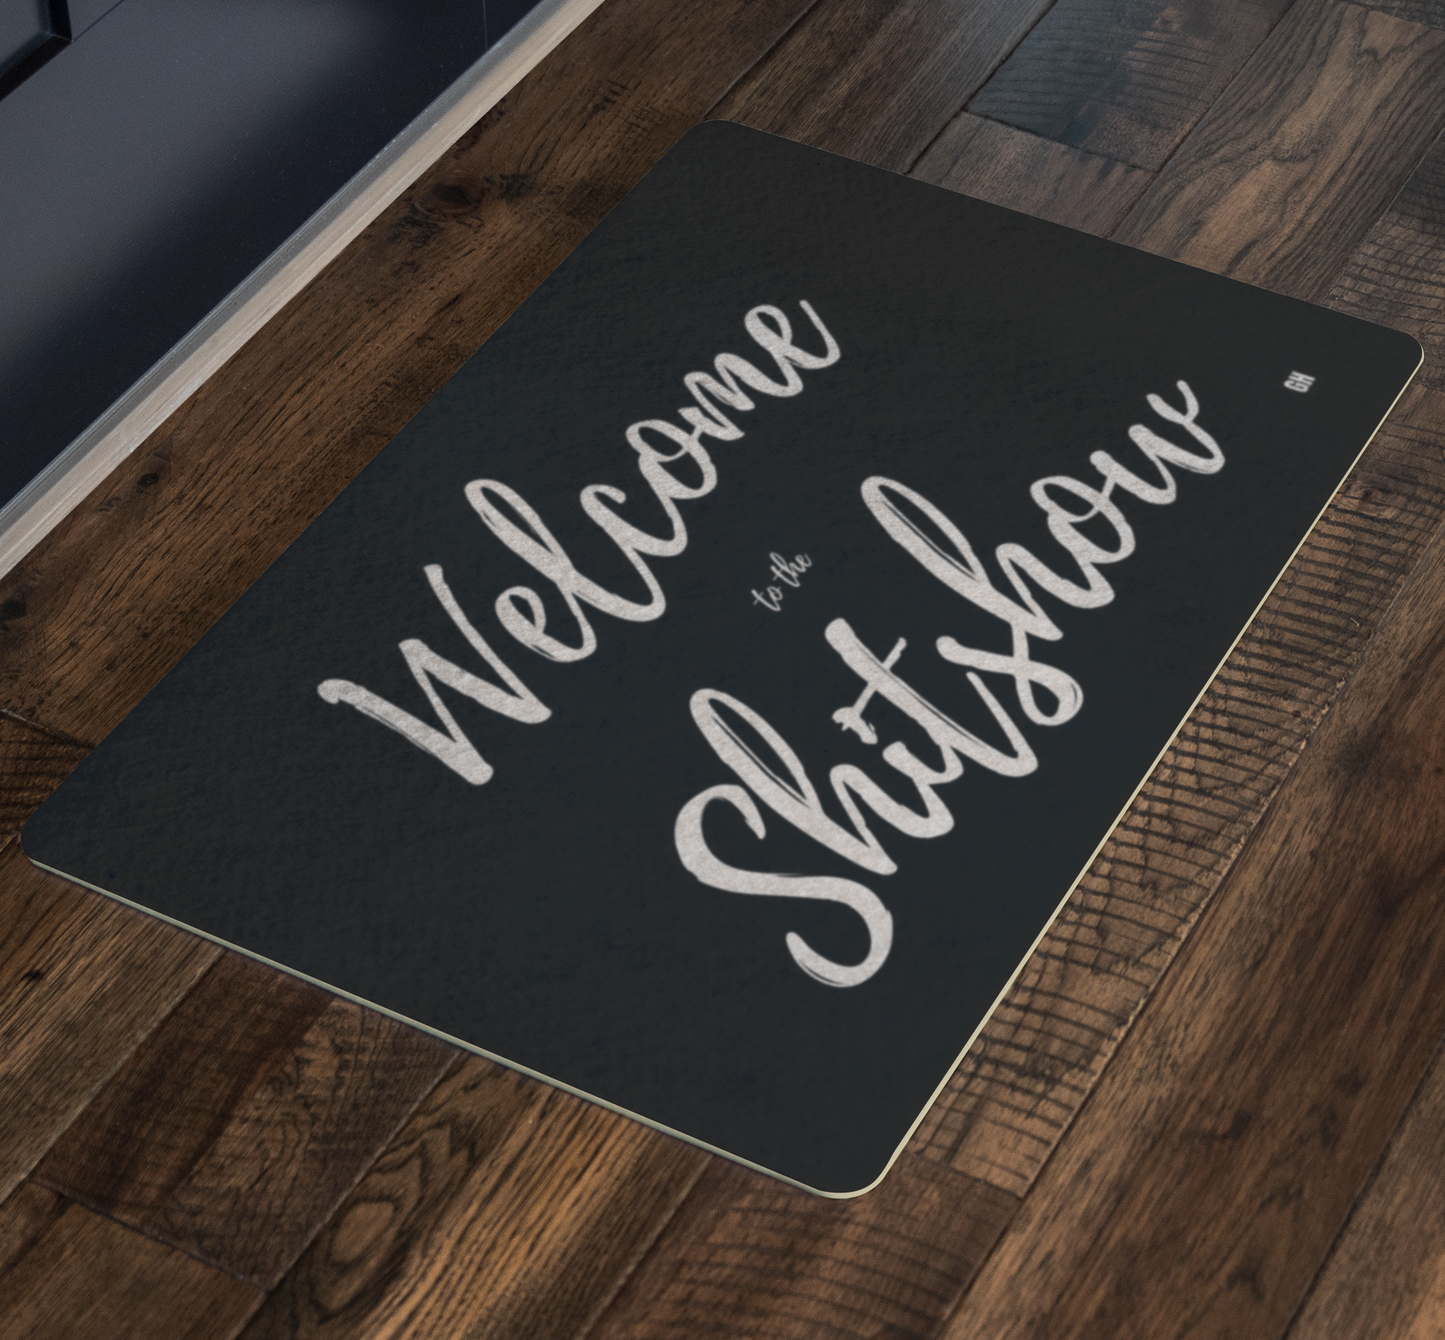 Welcome to the S show Doormat